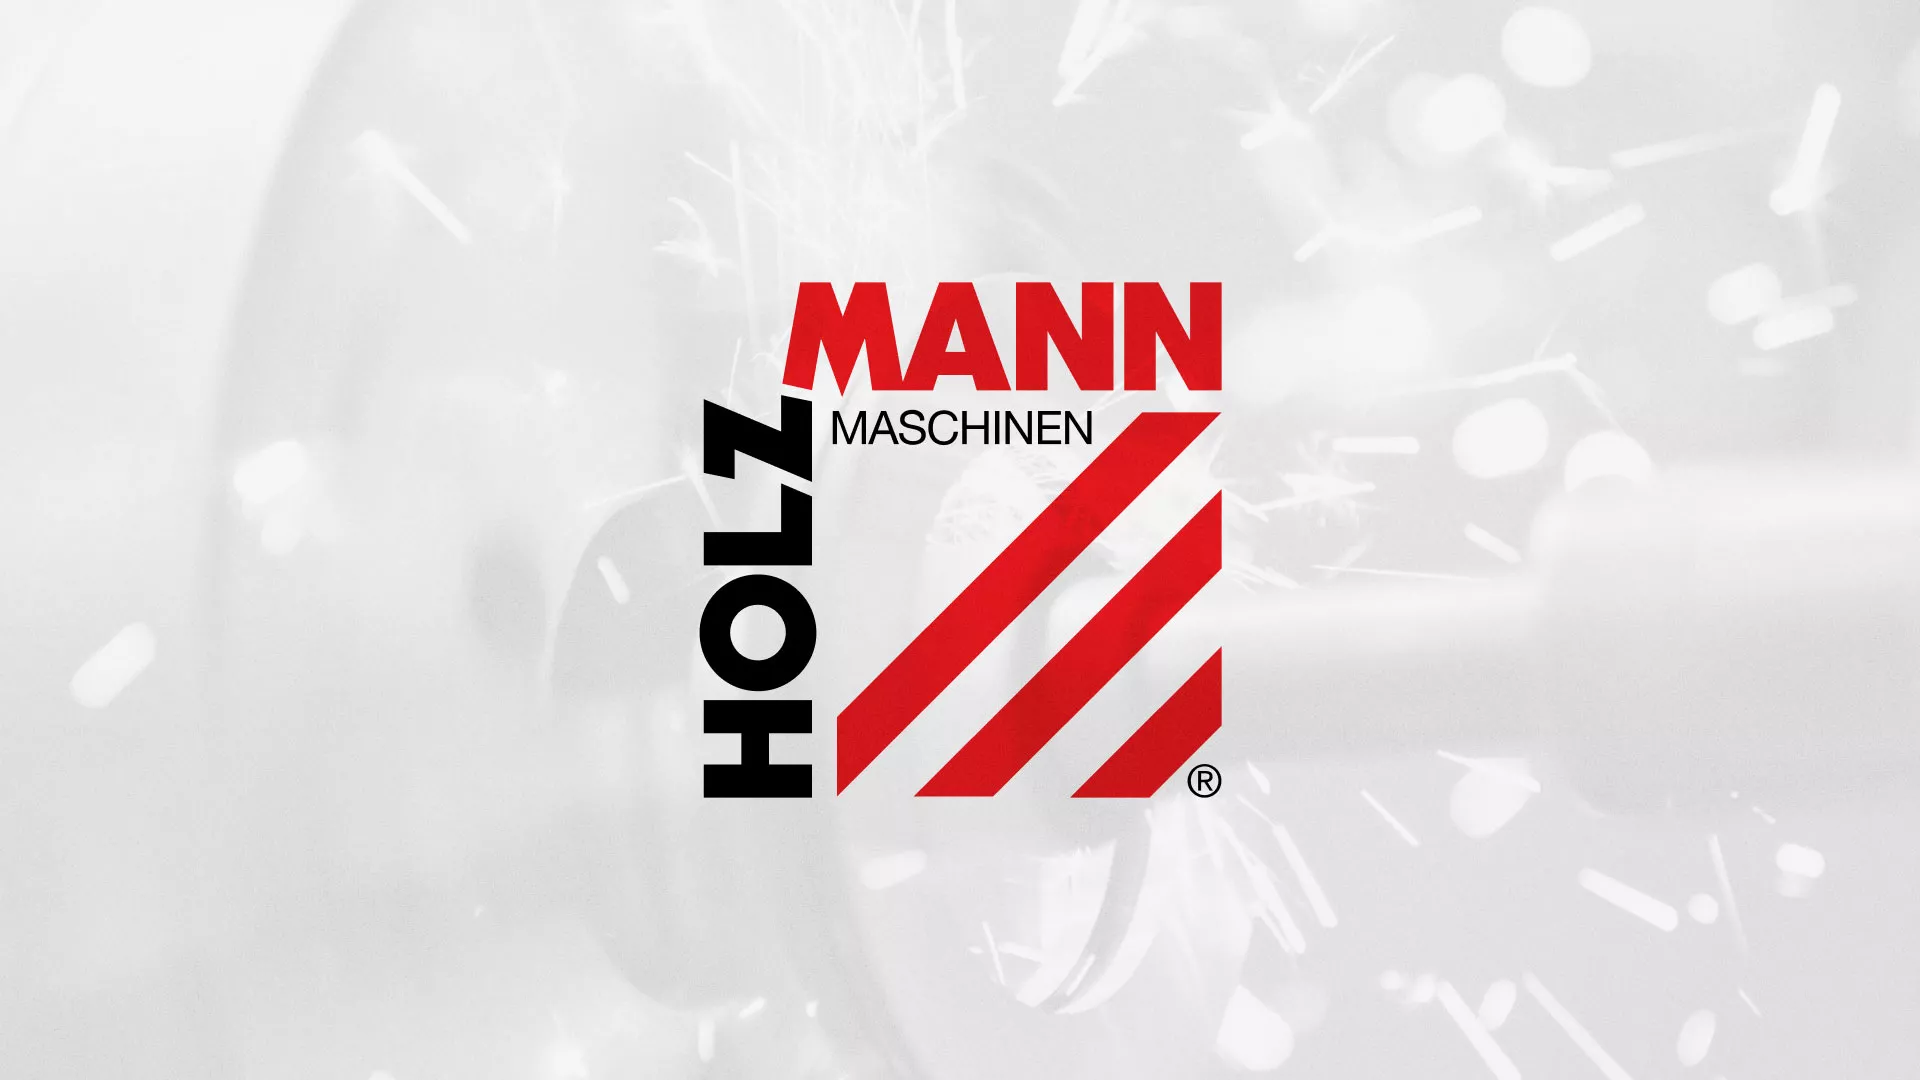 Создание сайта компании «HOLZMANN Maschinen GmbH» в Пскове